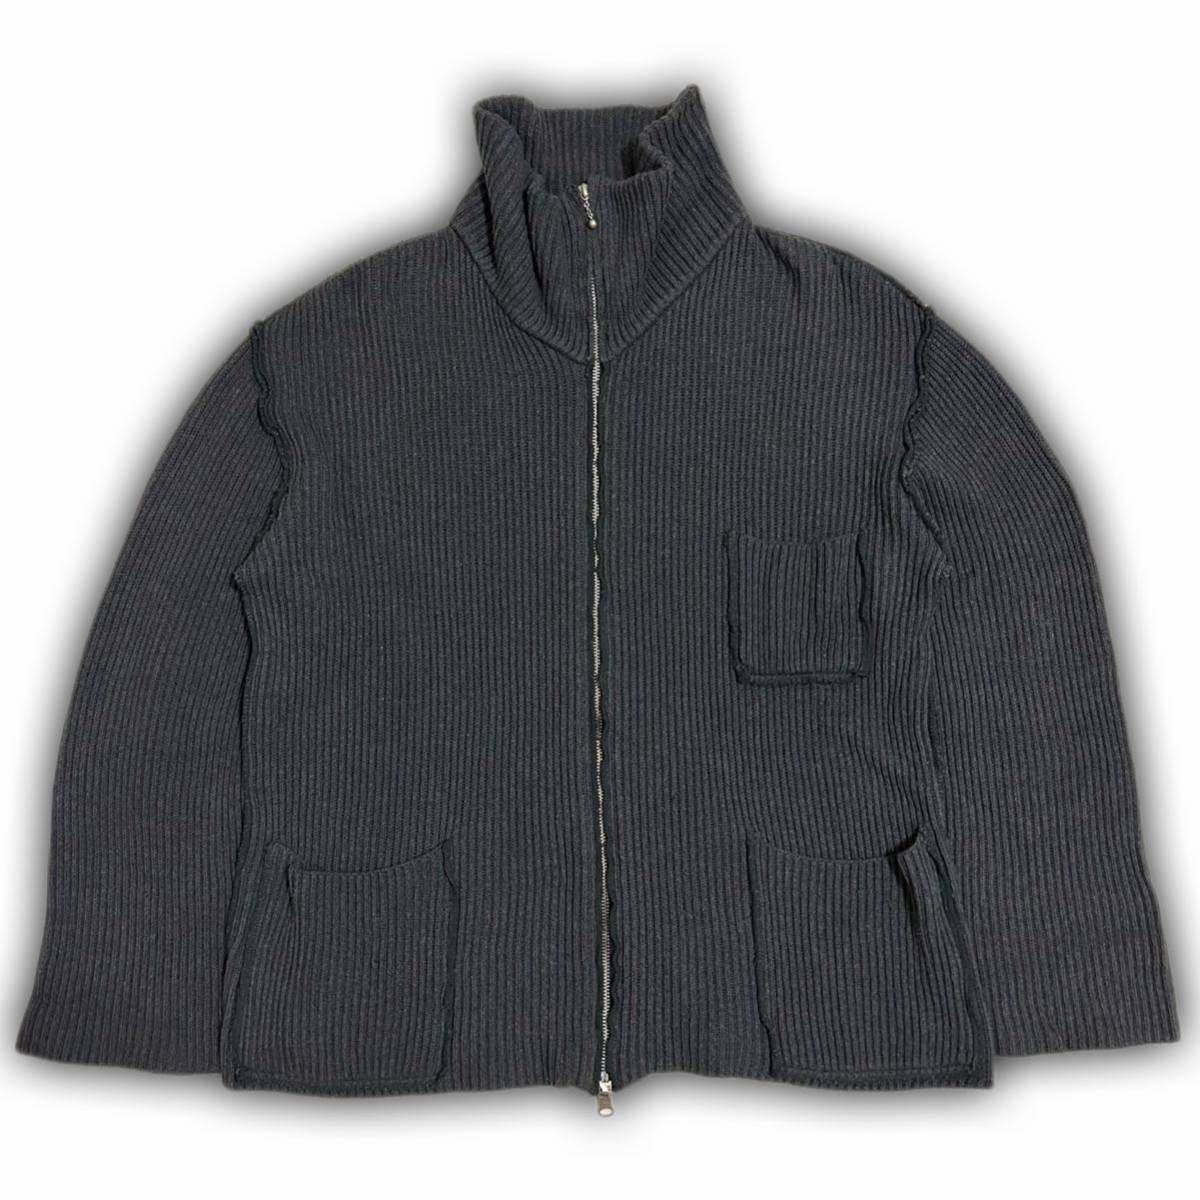 Rare 90s MASAKI MATSUSHIMA Insideout Knit jacket raf simons helmut lang margiela garcons archive архив Masaki Matsushima вязаный 